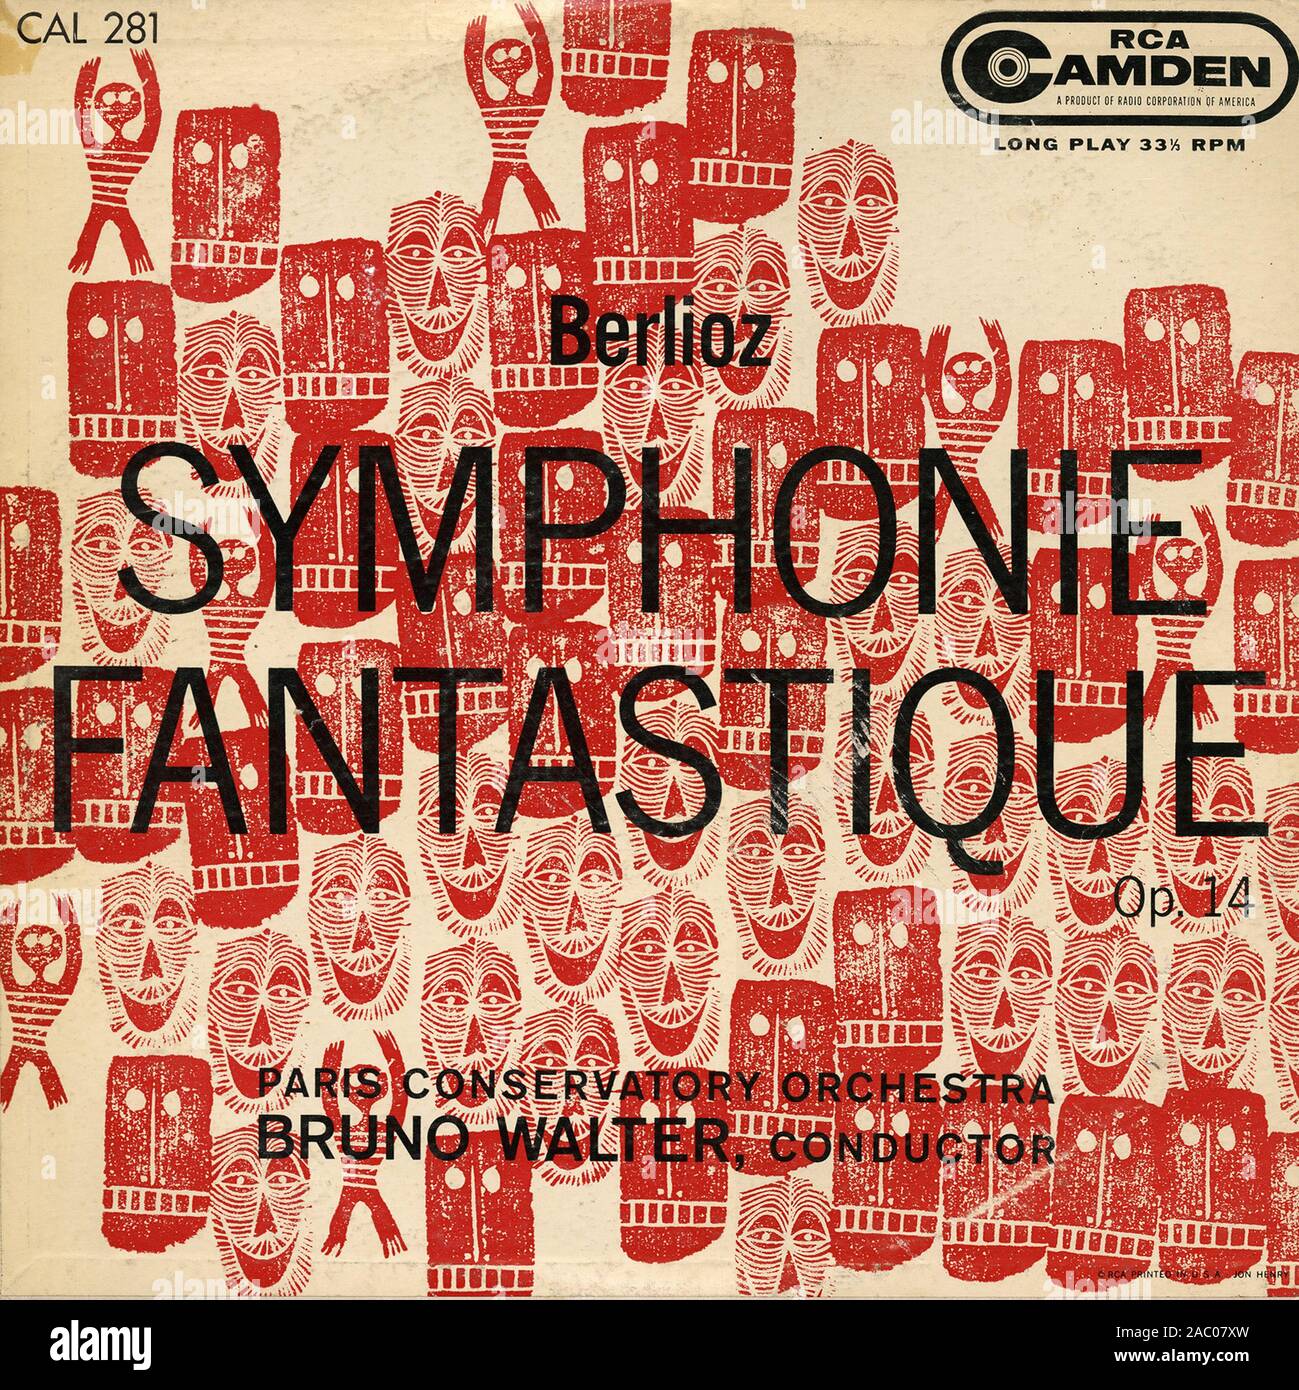 Berlioz Symphonie Fantastique  - Vintage vinyl album cover Stock Photo